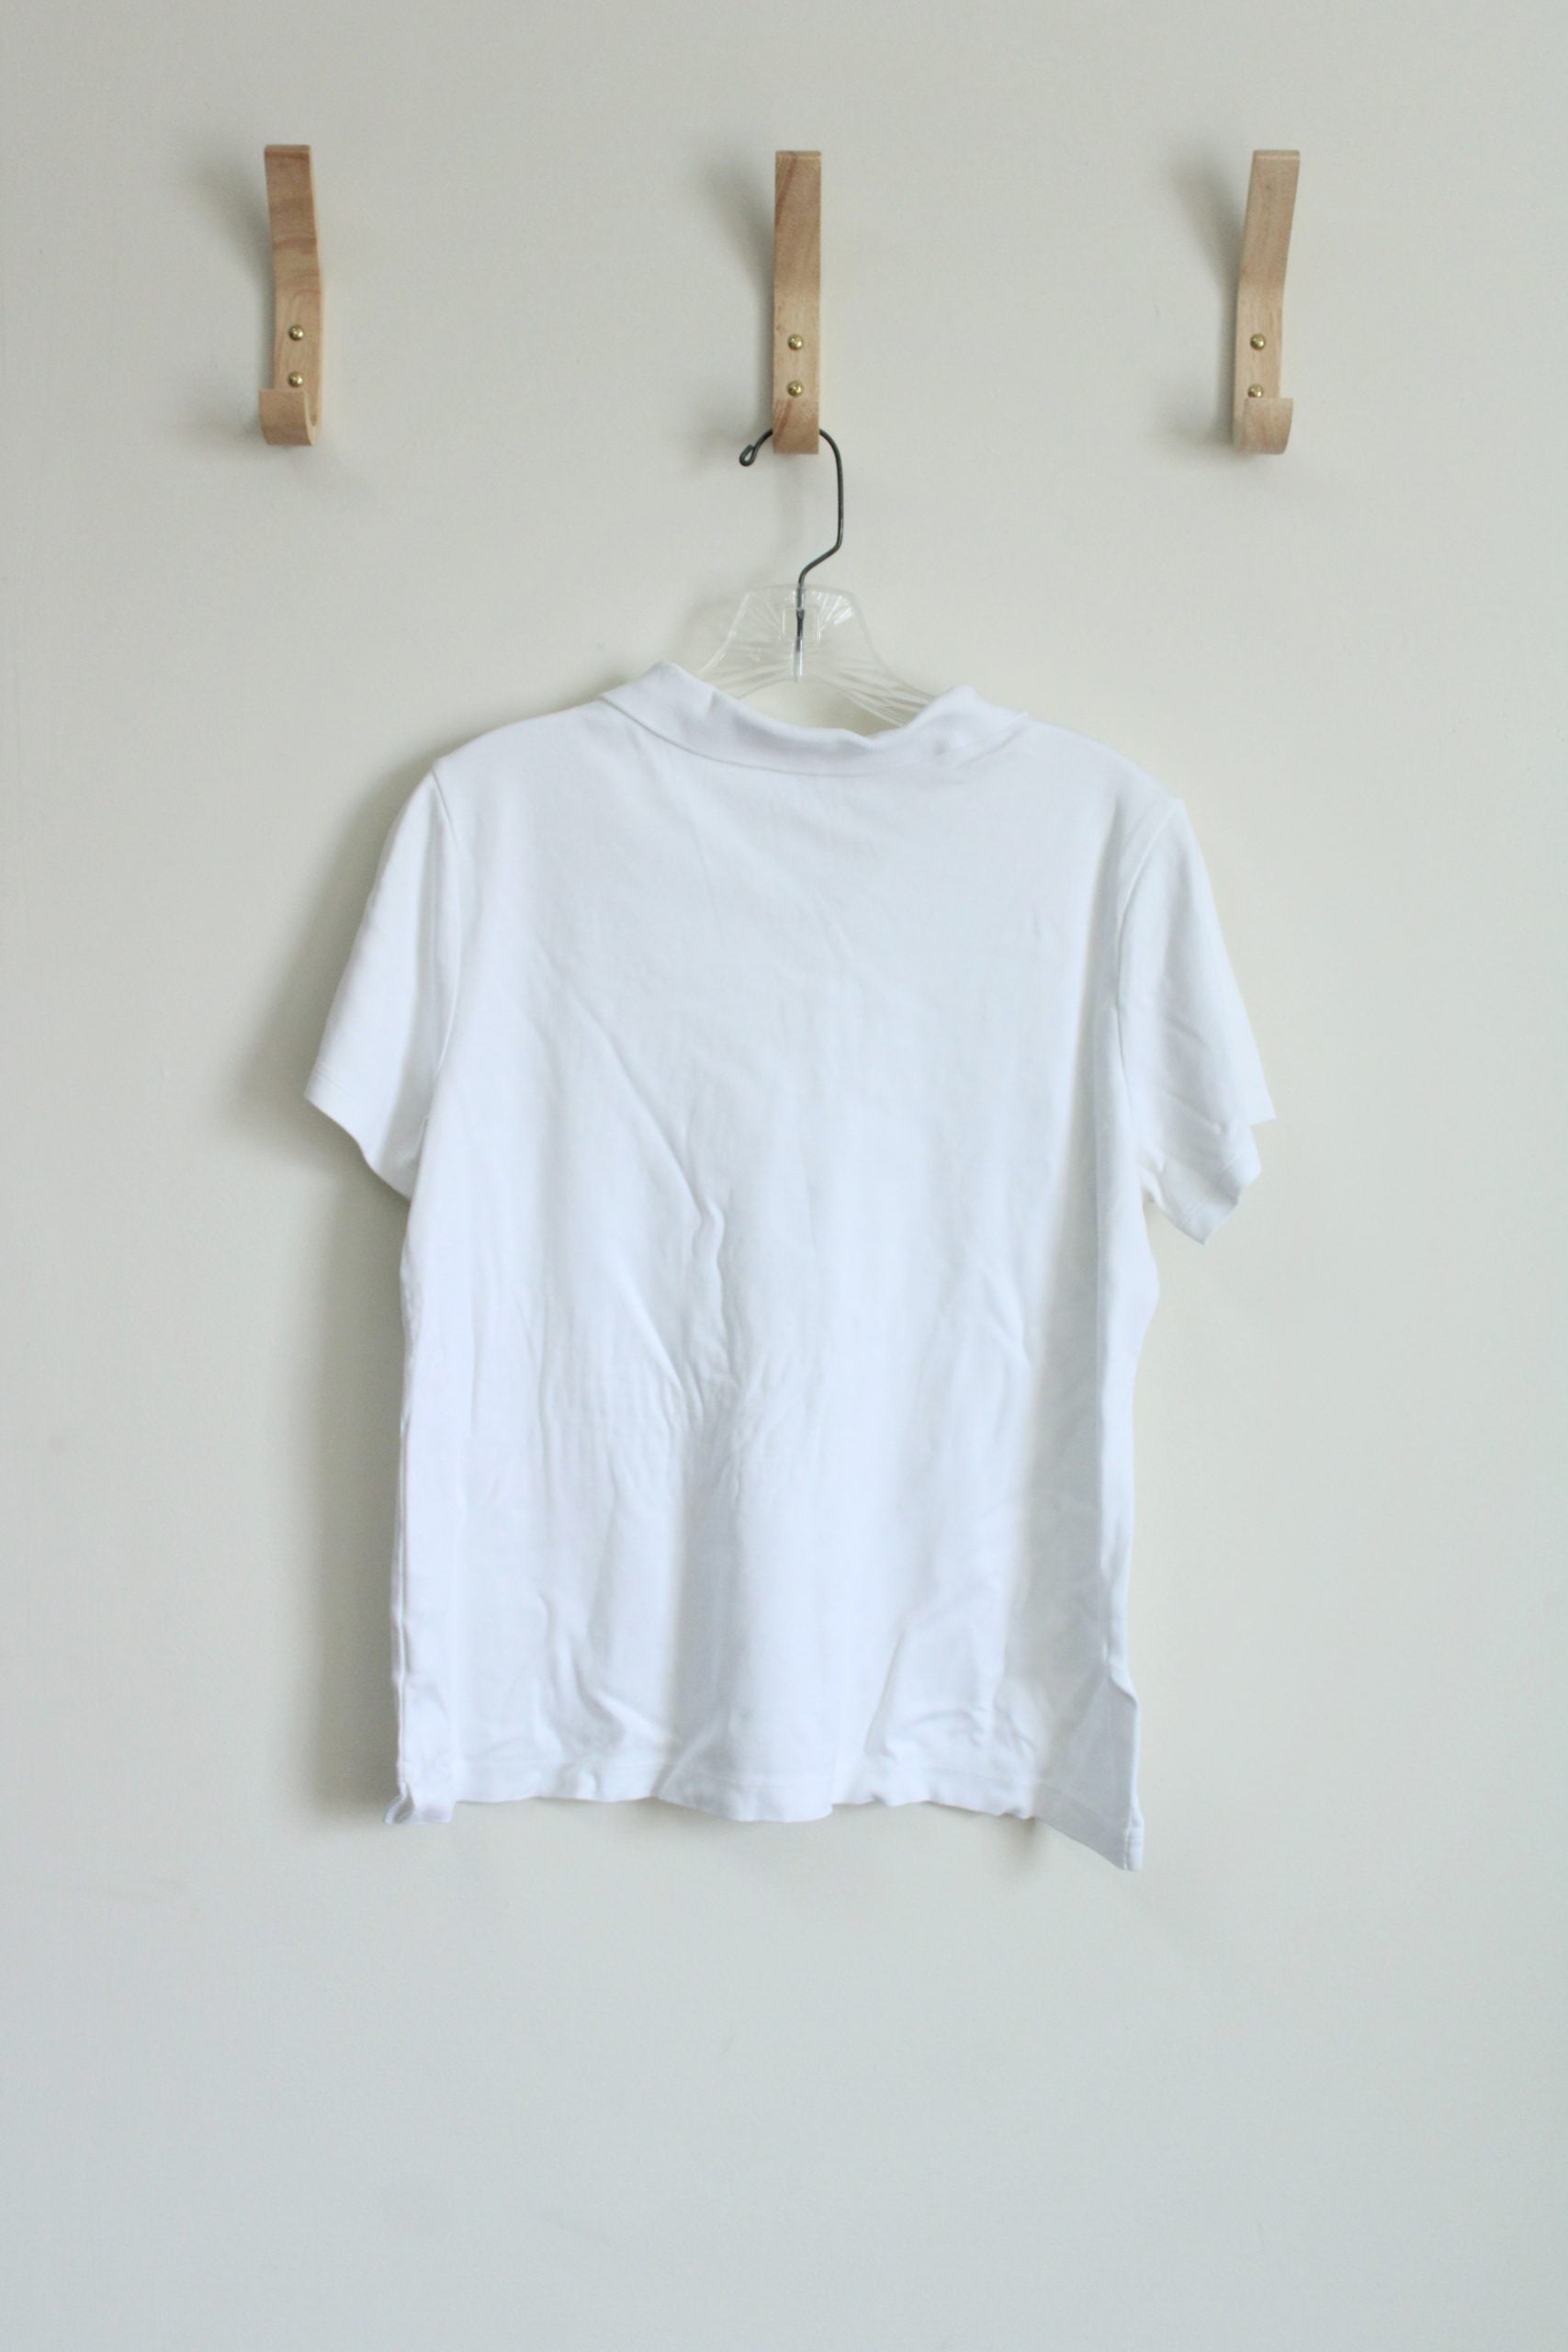 Lands' End White Polo Shirt | Size M